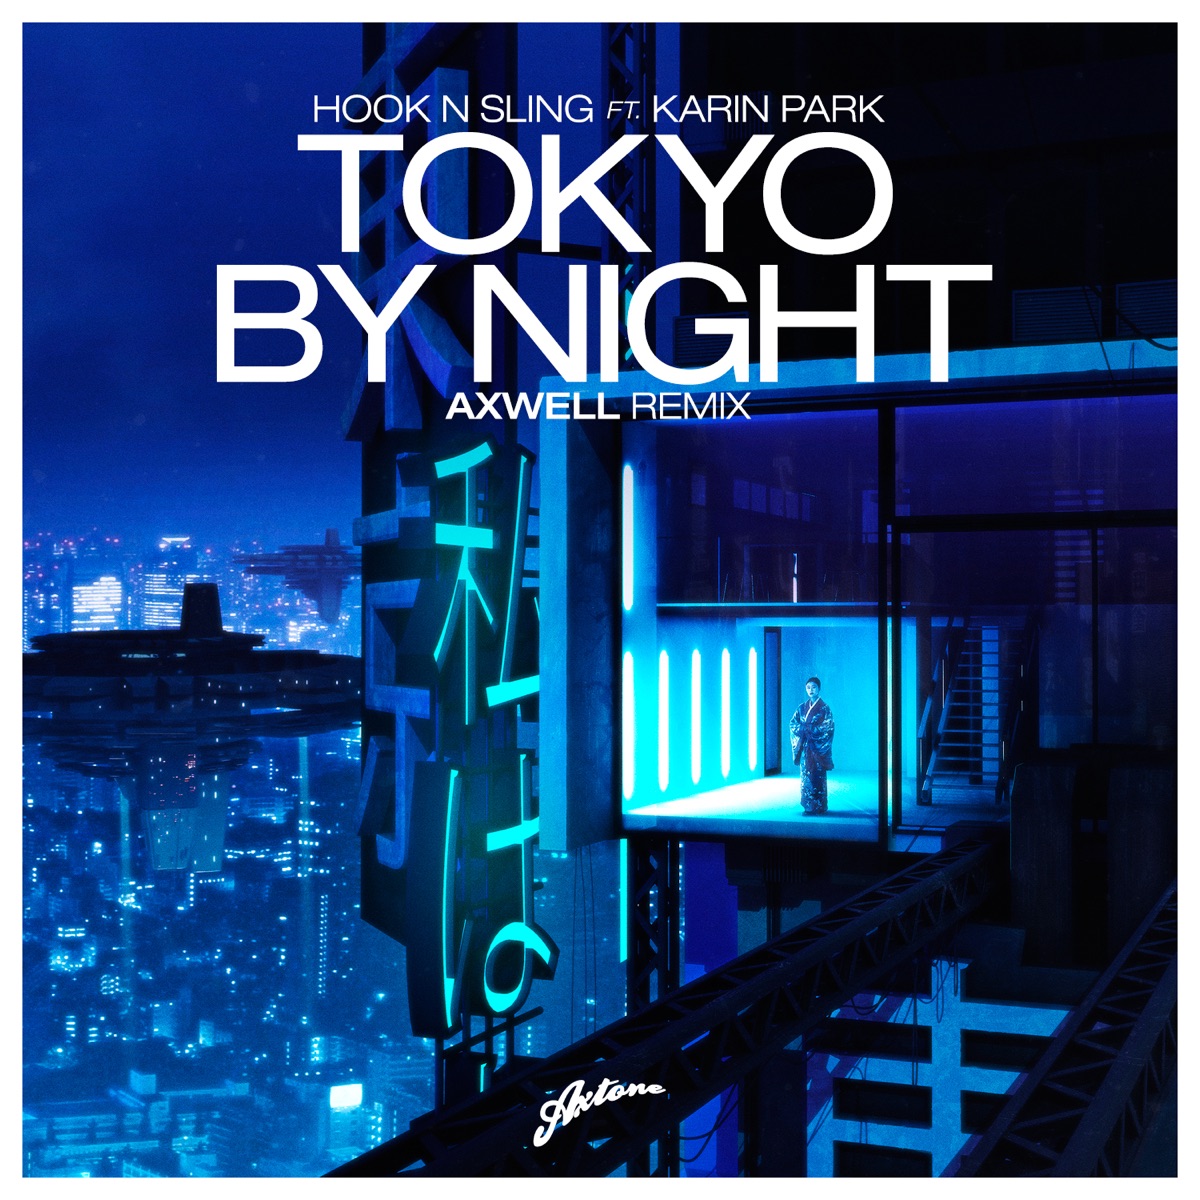 Bad Karaoke Vol. 1: Nights In Tokyo [Full Mixcast]